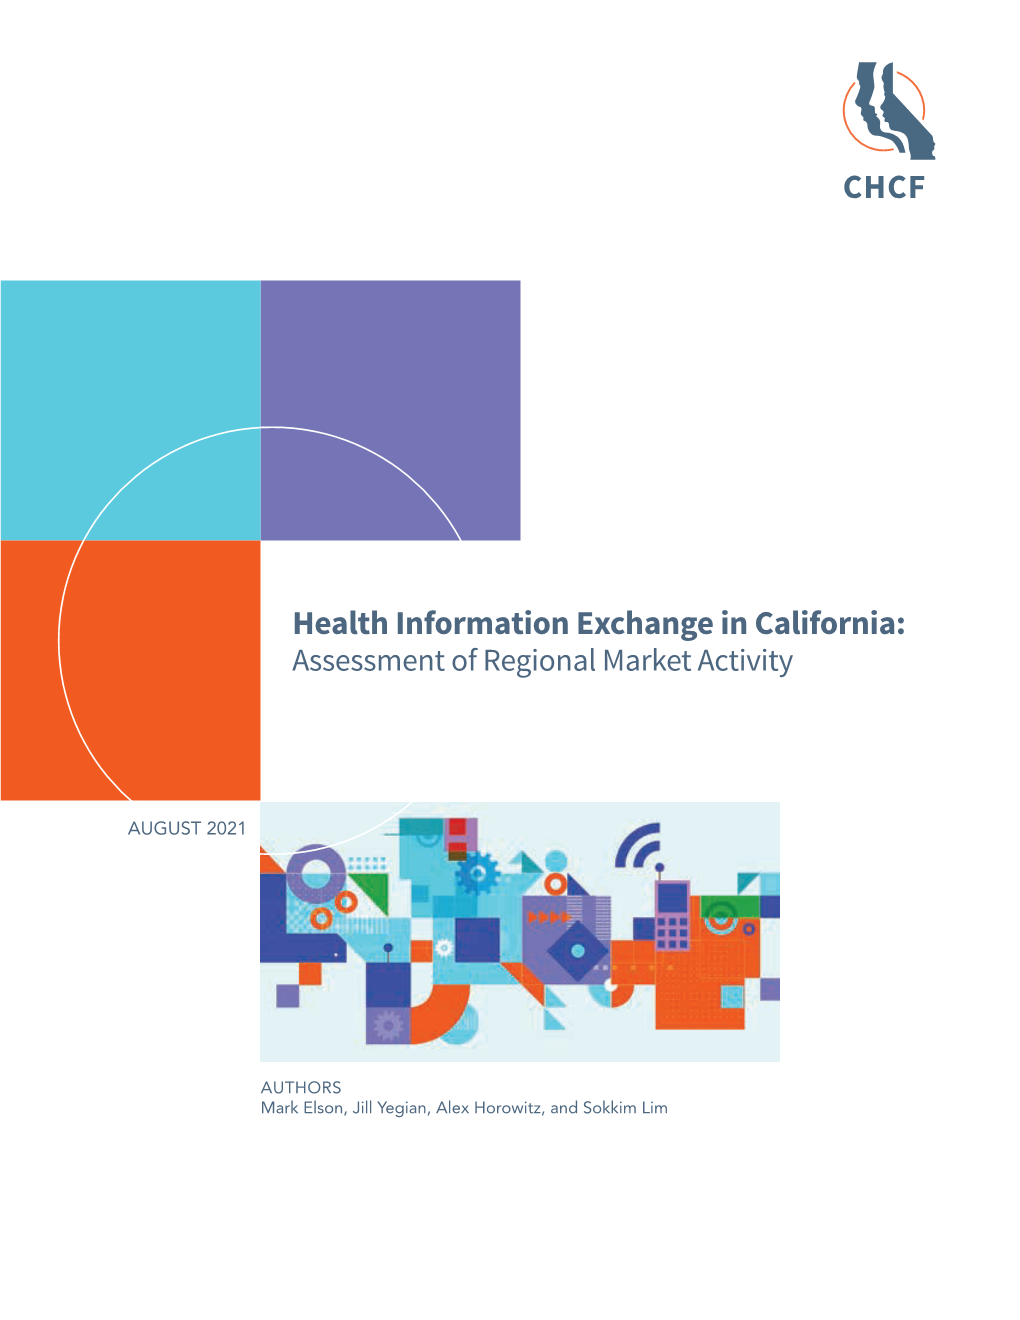 Health Information Exchange in California: Assessment of Regional Market Activity